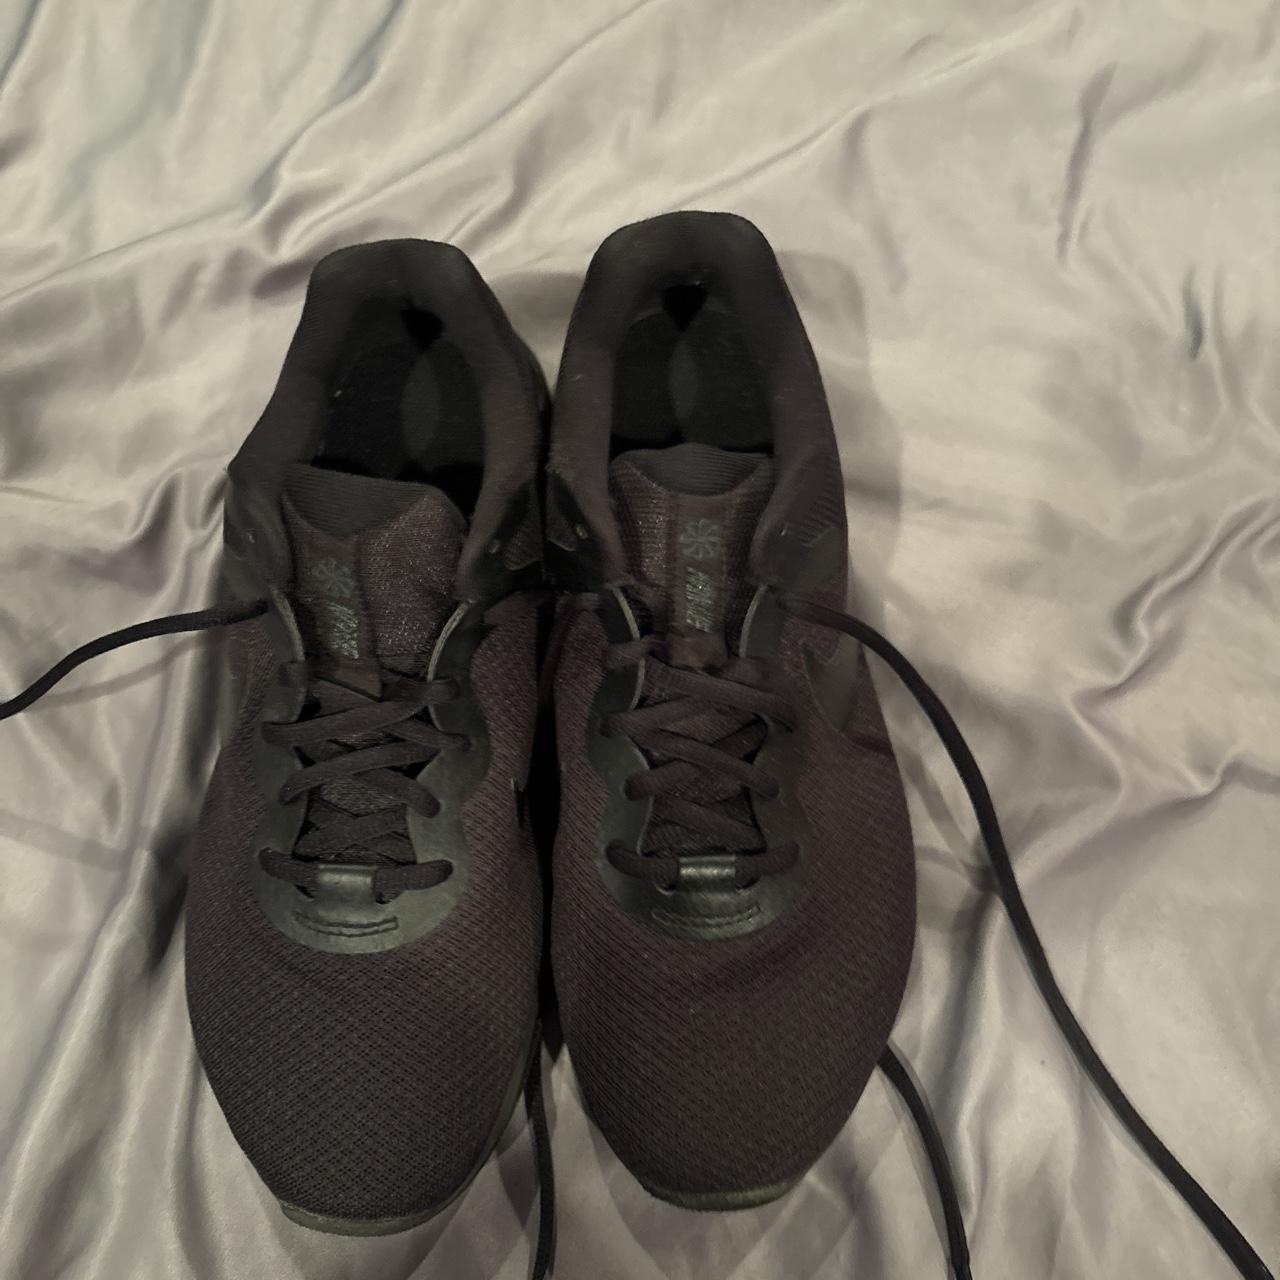 Black Running Shoes - Depop